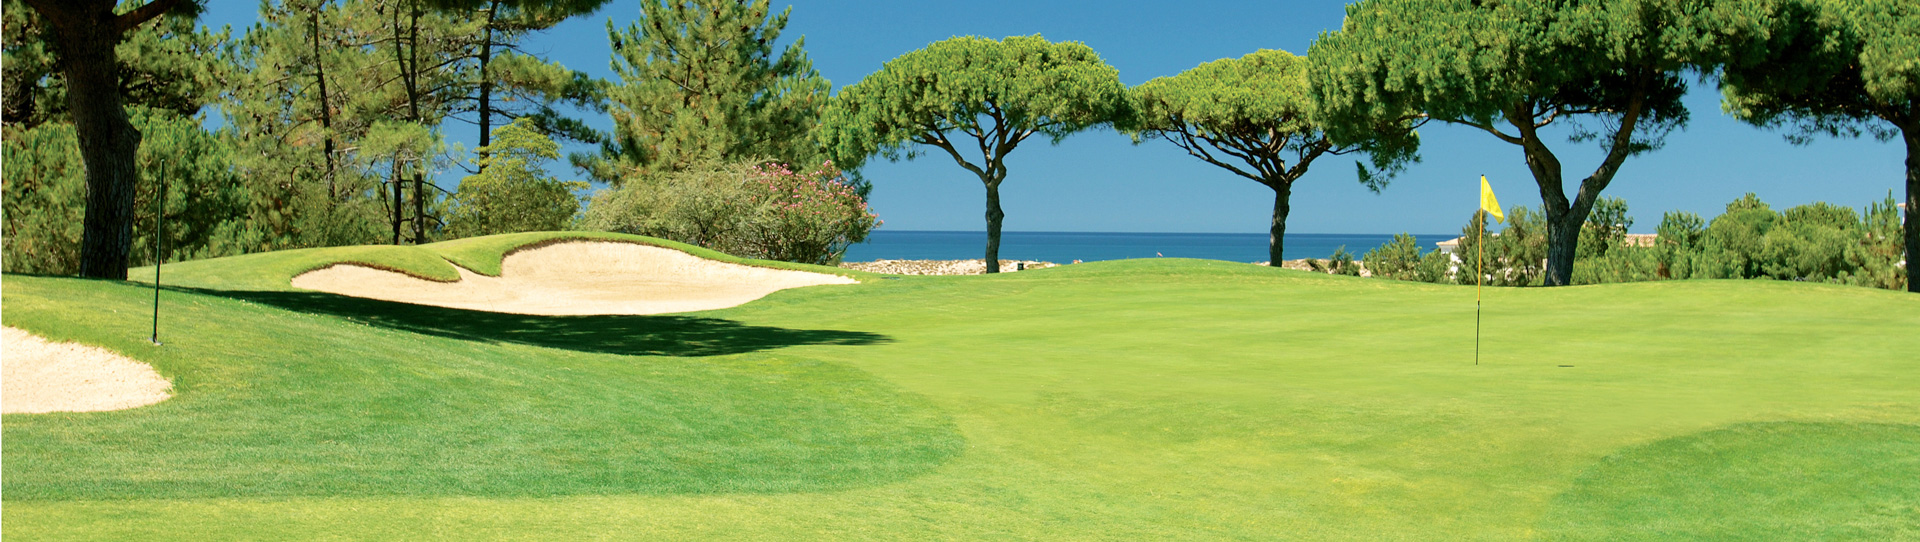 Portugal golf courses - San Lorenzo Golf Course - Photo 1